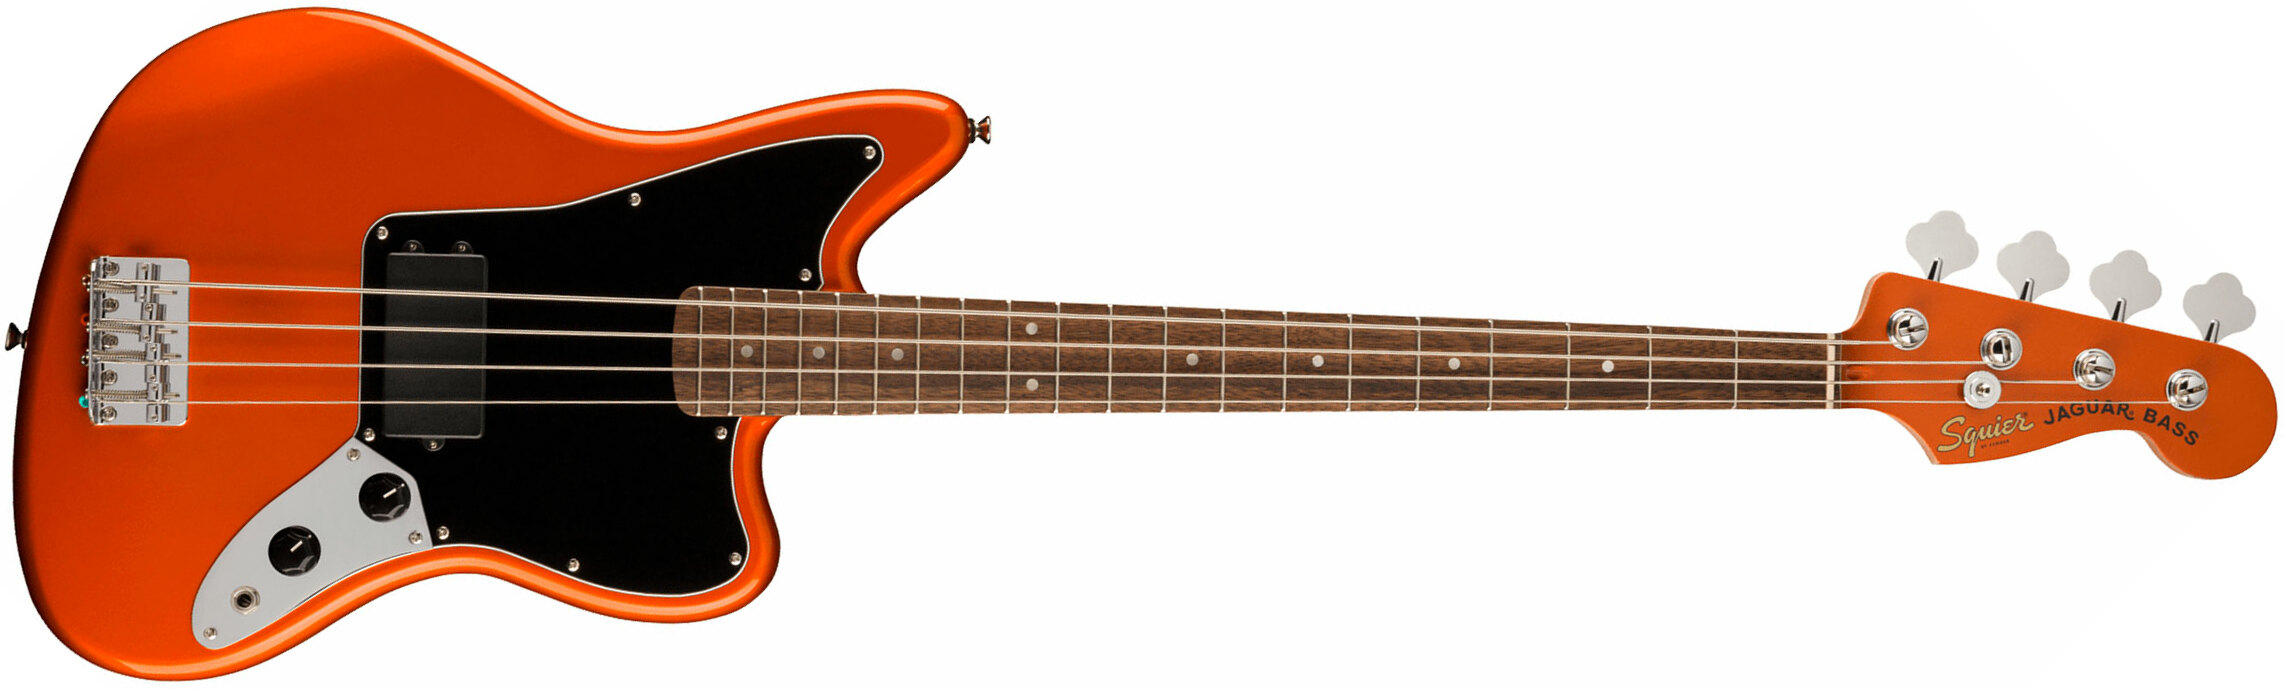 Squier Jaguar Bass H Affinity Fsr Lau - Metallic Orange - Bajo eléctrico de cuerpo sólido - Main picture